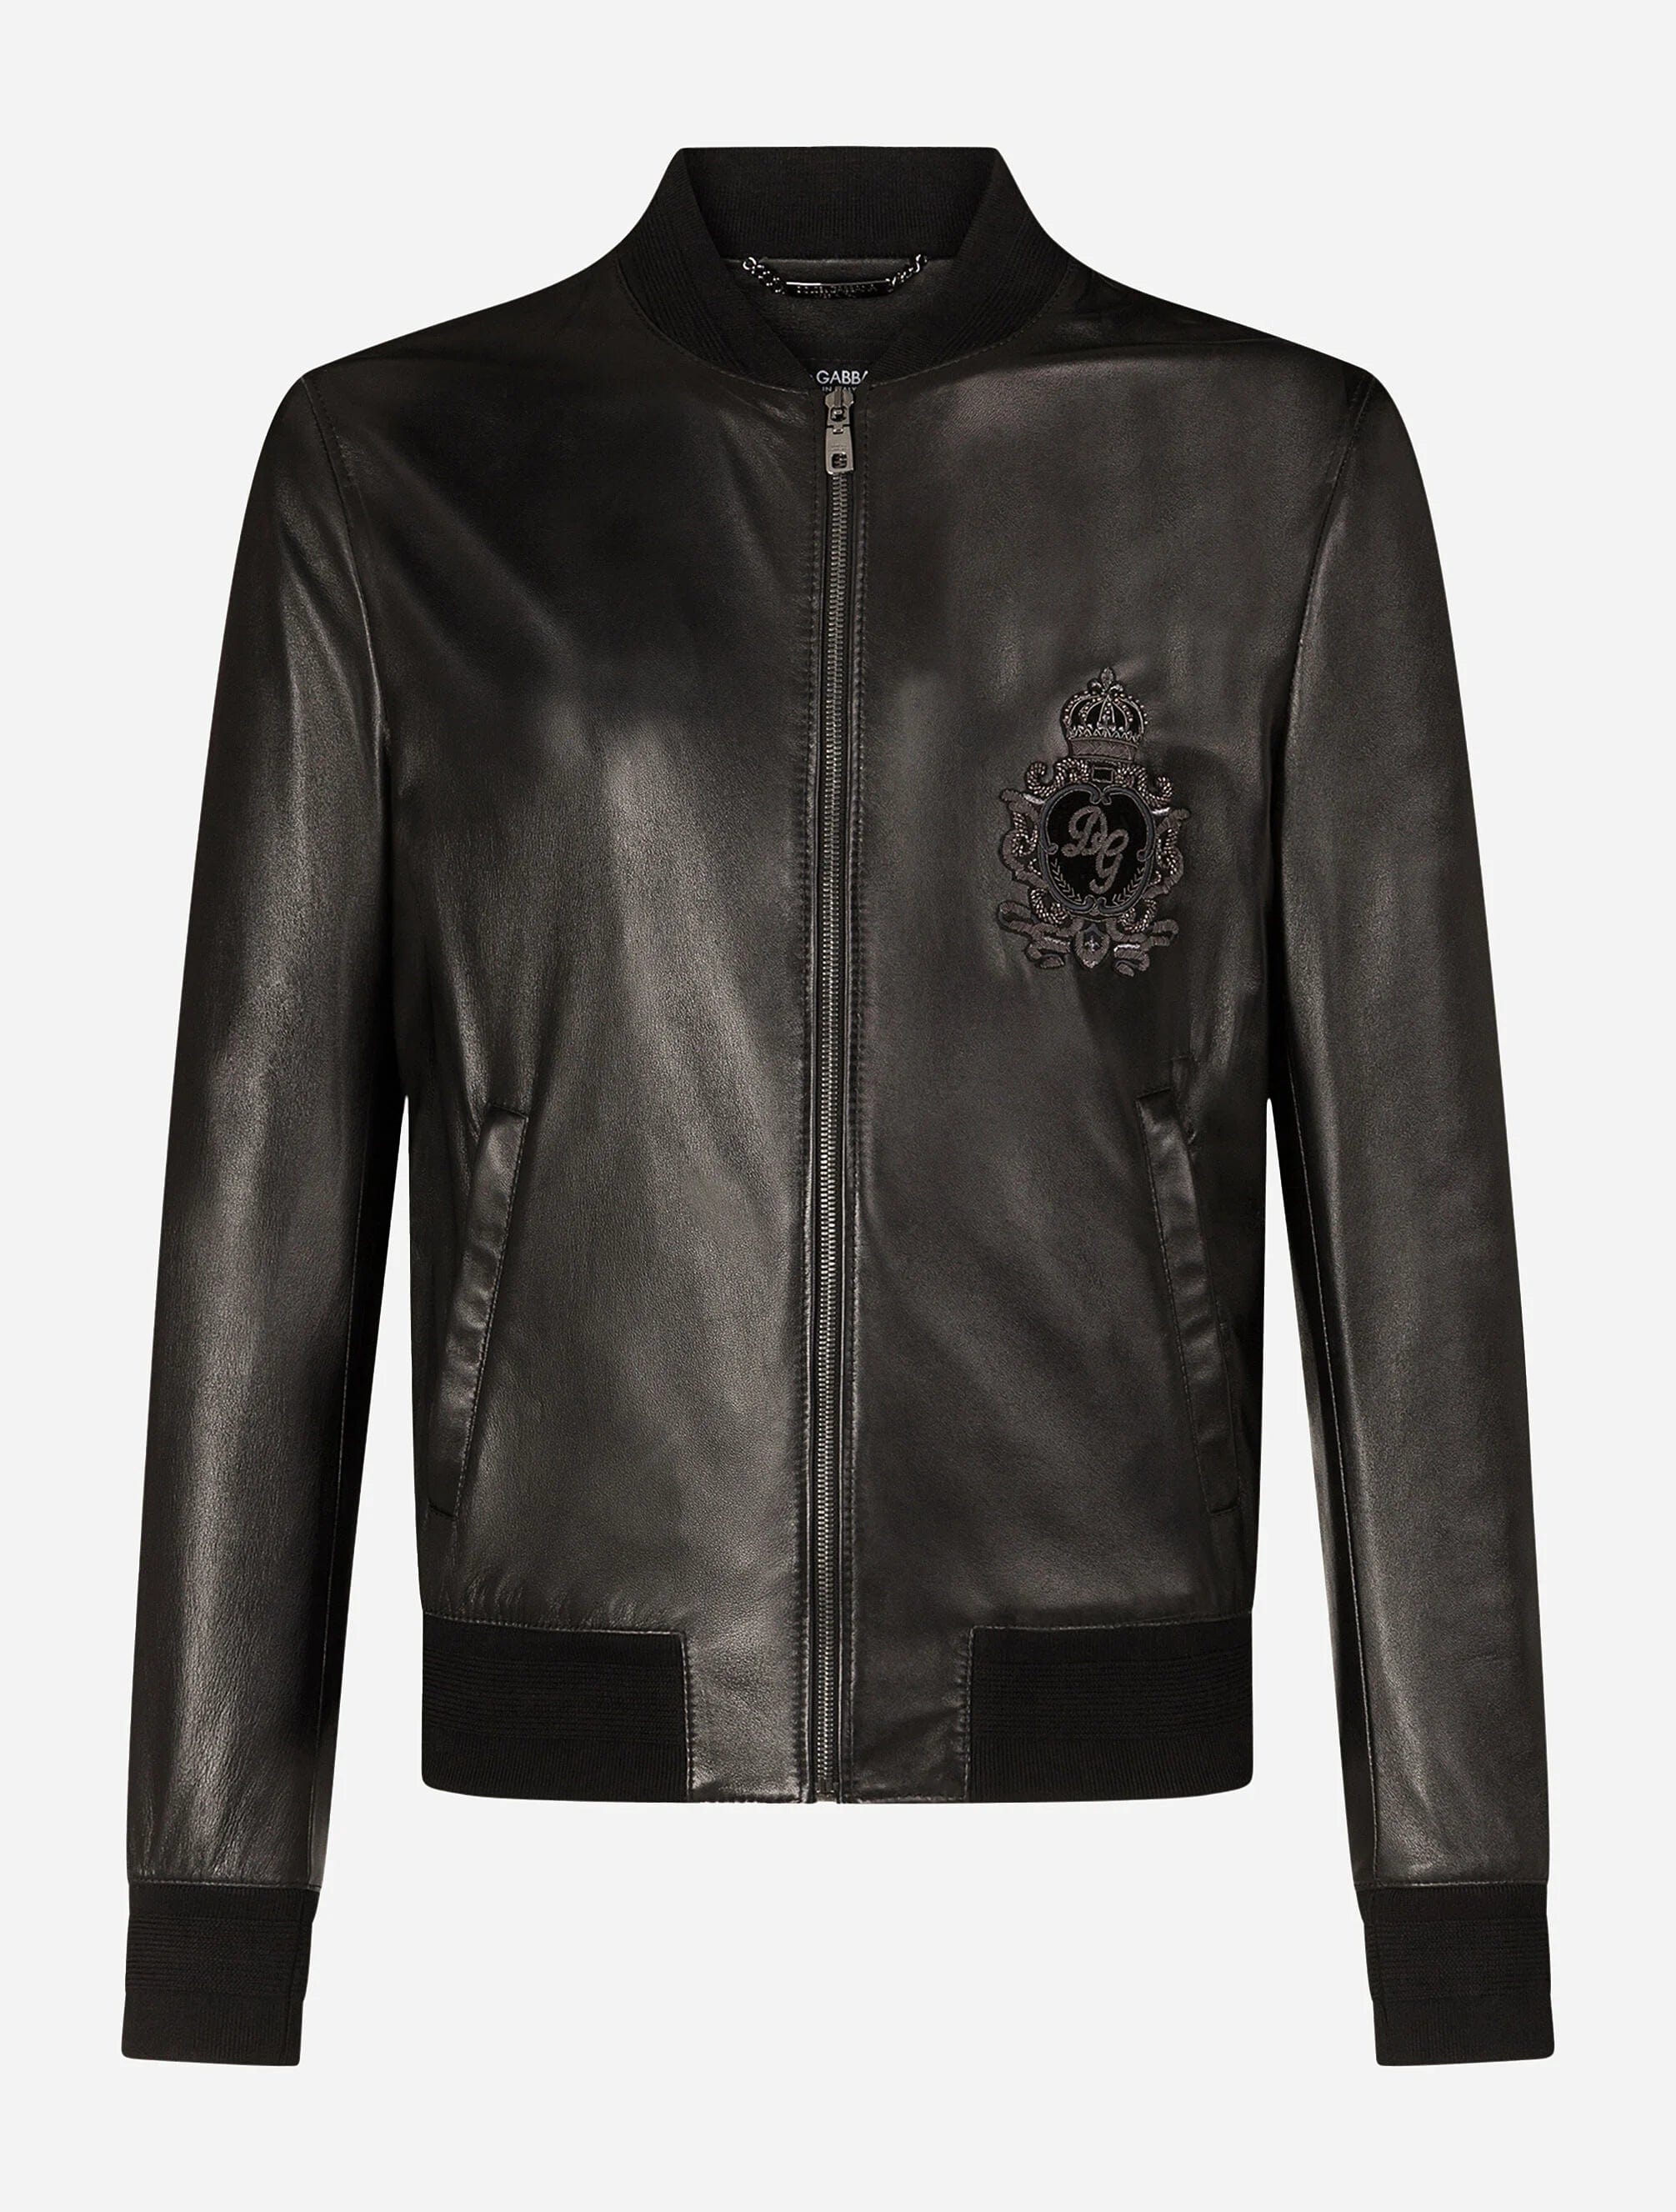 Dolce & Gabbana DG Patch Leather Bomber Jacket